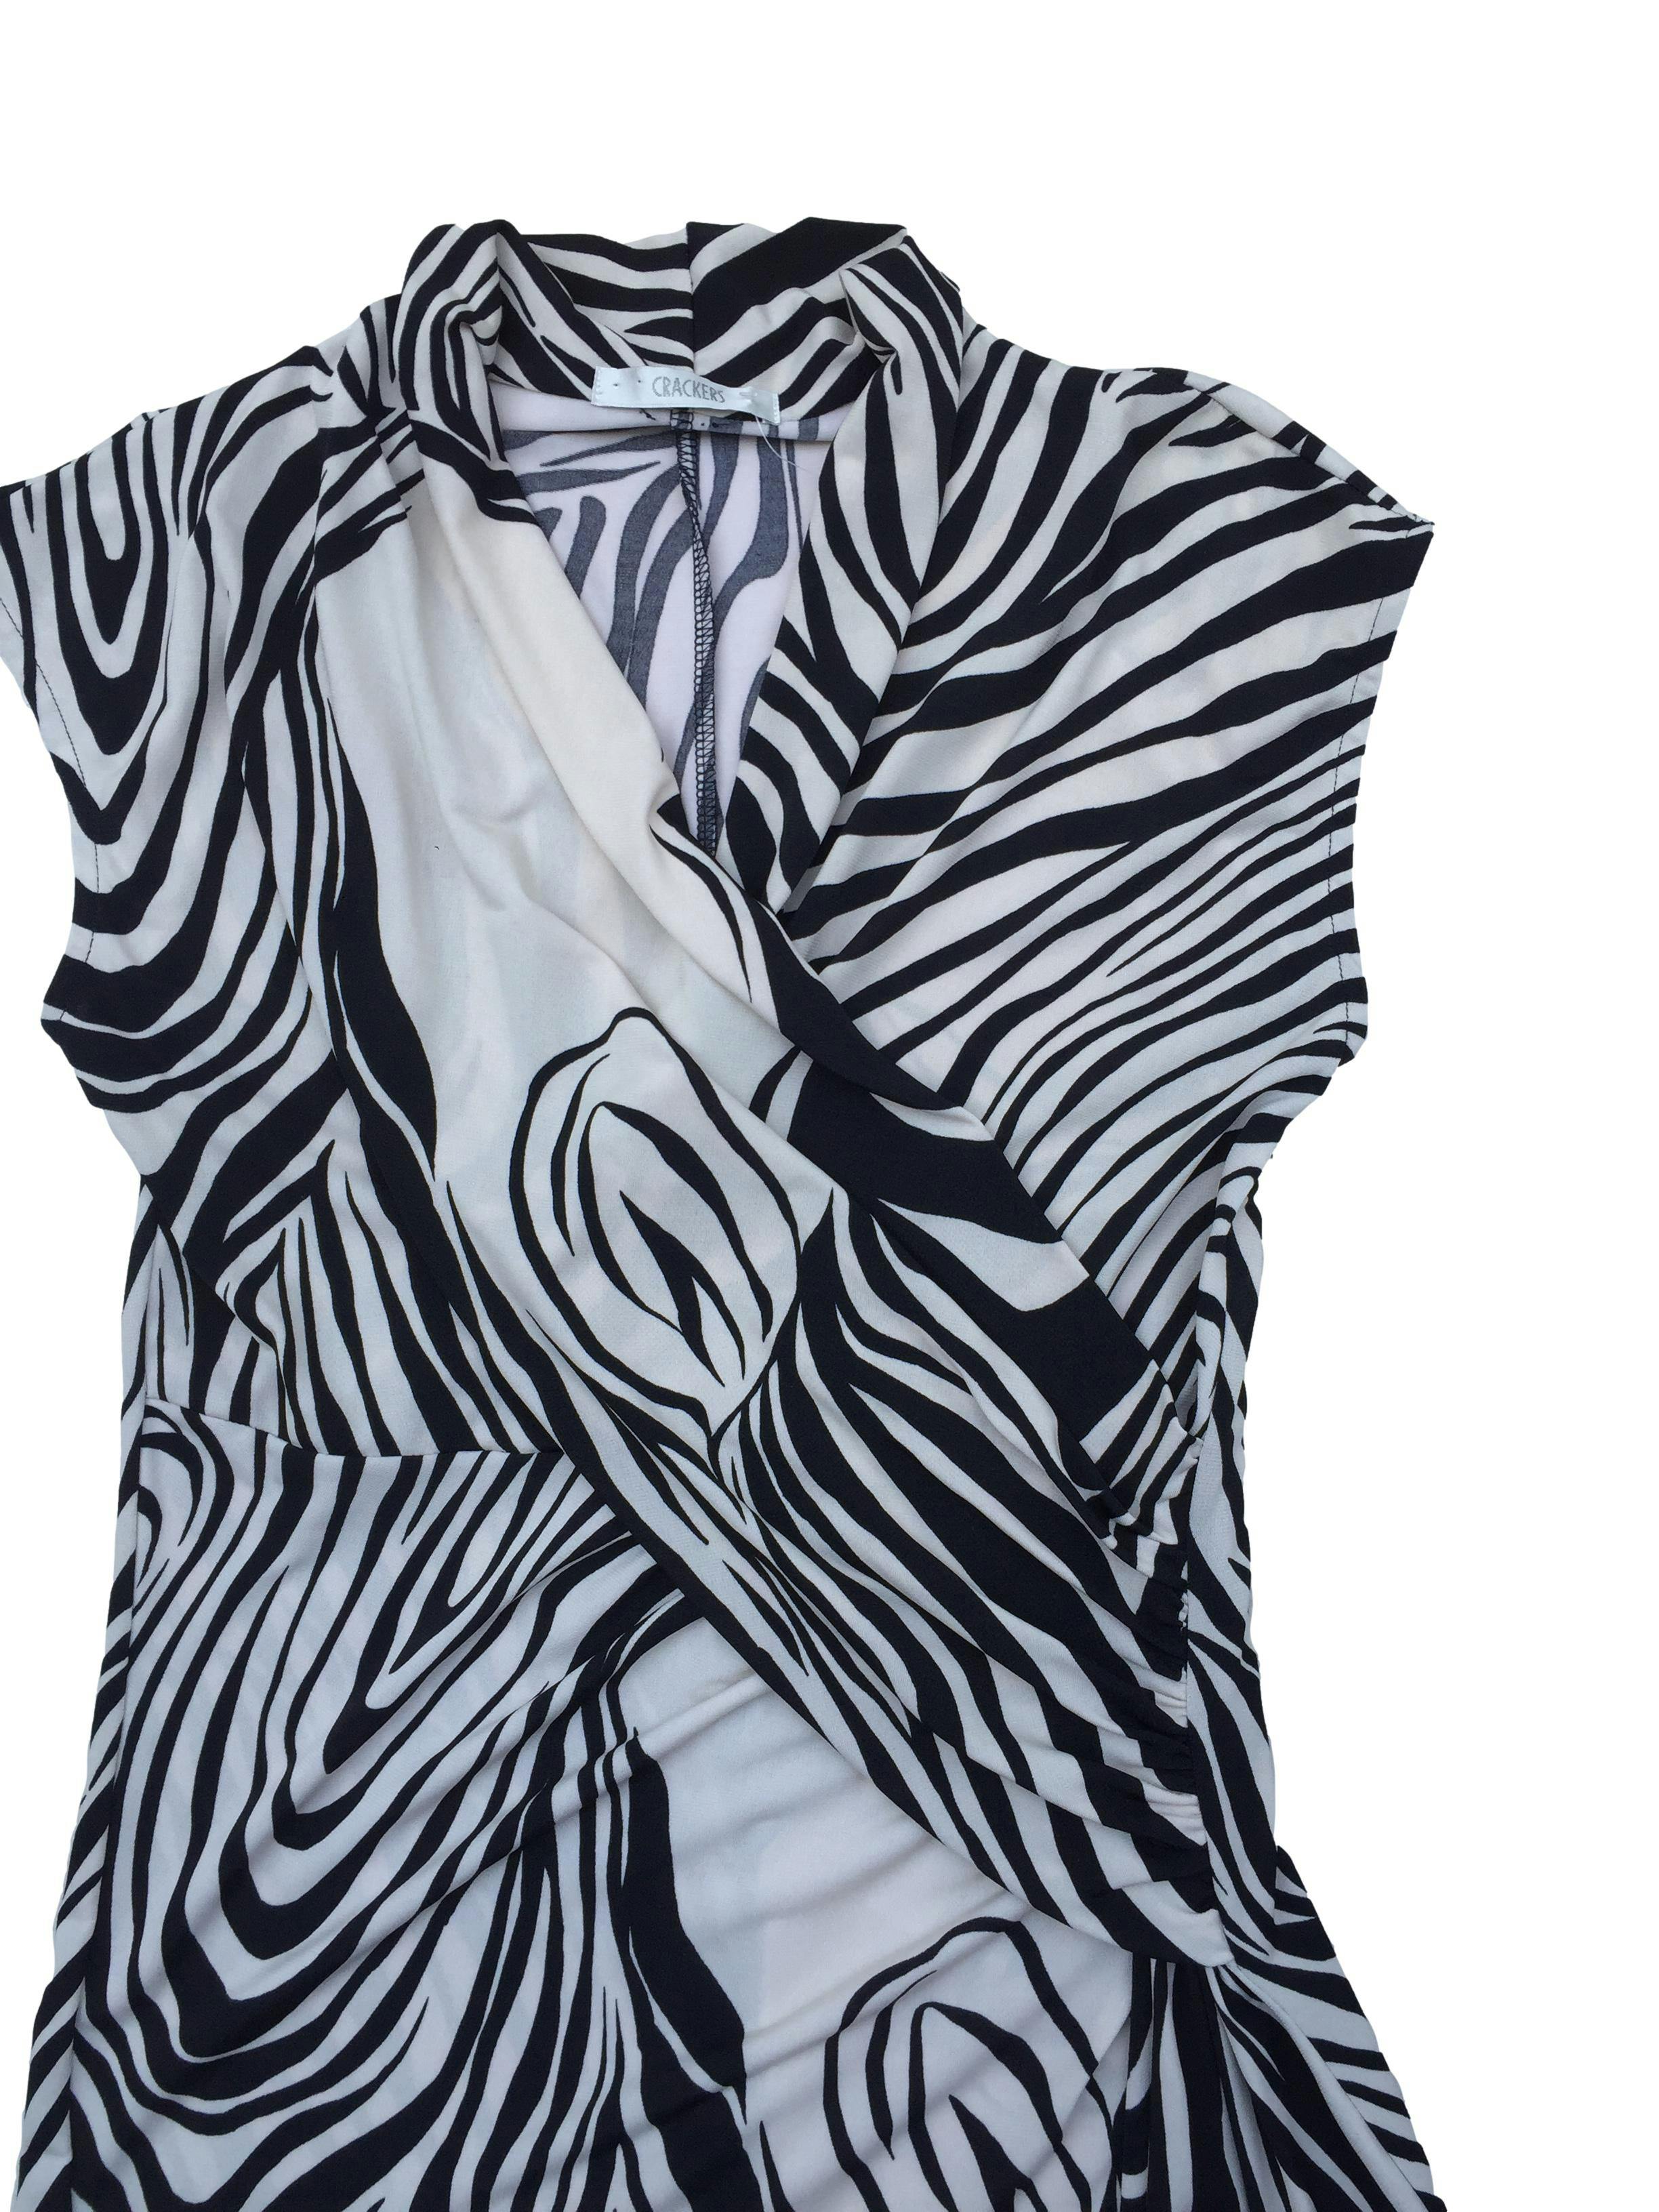 Vestido Crackers zebra print beige y negro, delantero cruzado, tela stretch. Busto 90cm Largo 80cm